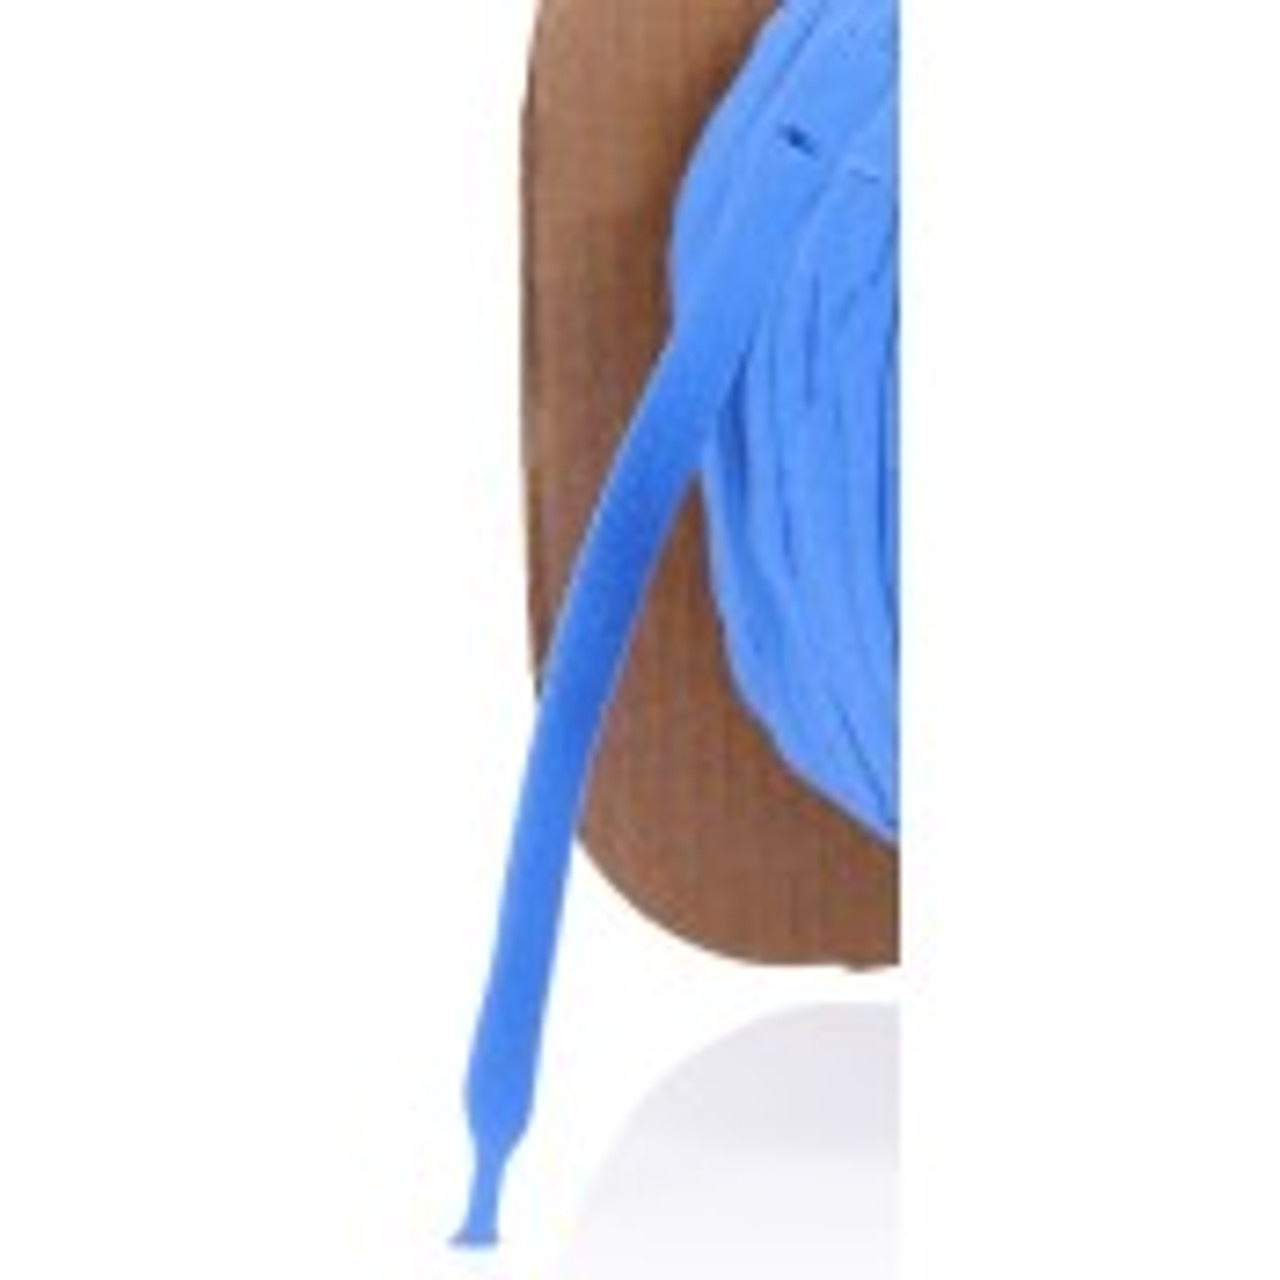 3/4 x 25 Yard Roll Velcro® Brand One-Wrap® Tape, Royal Blue 1